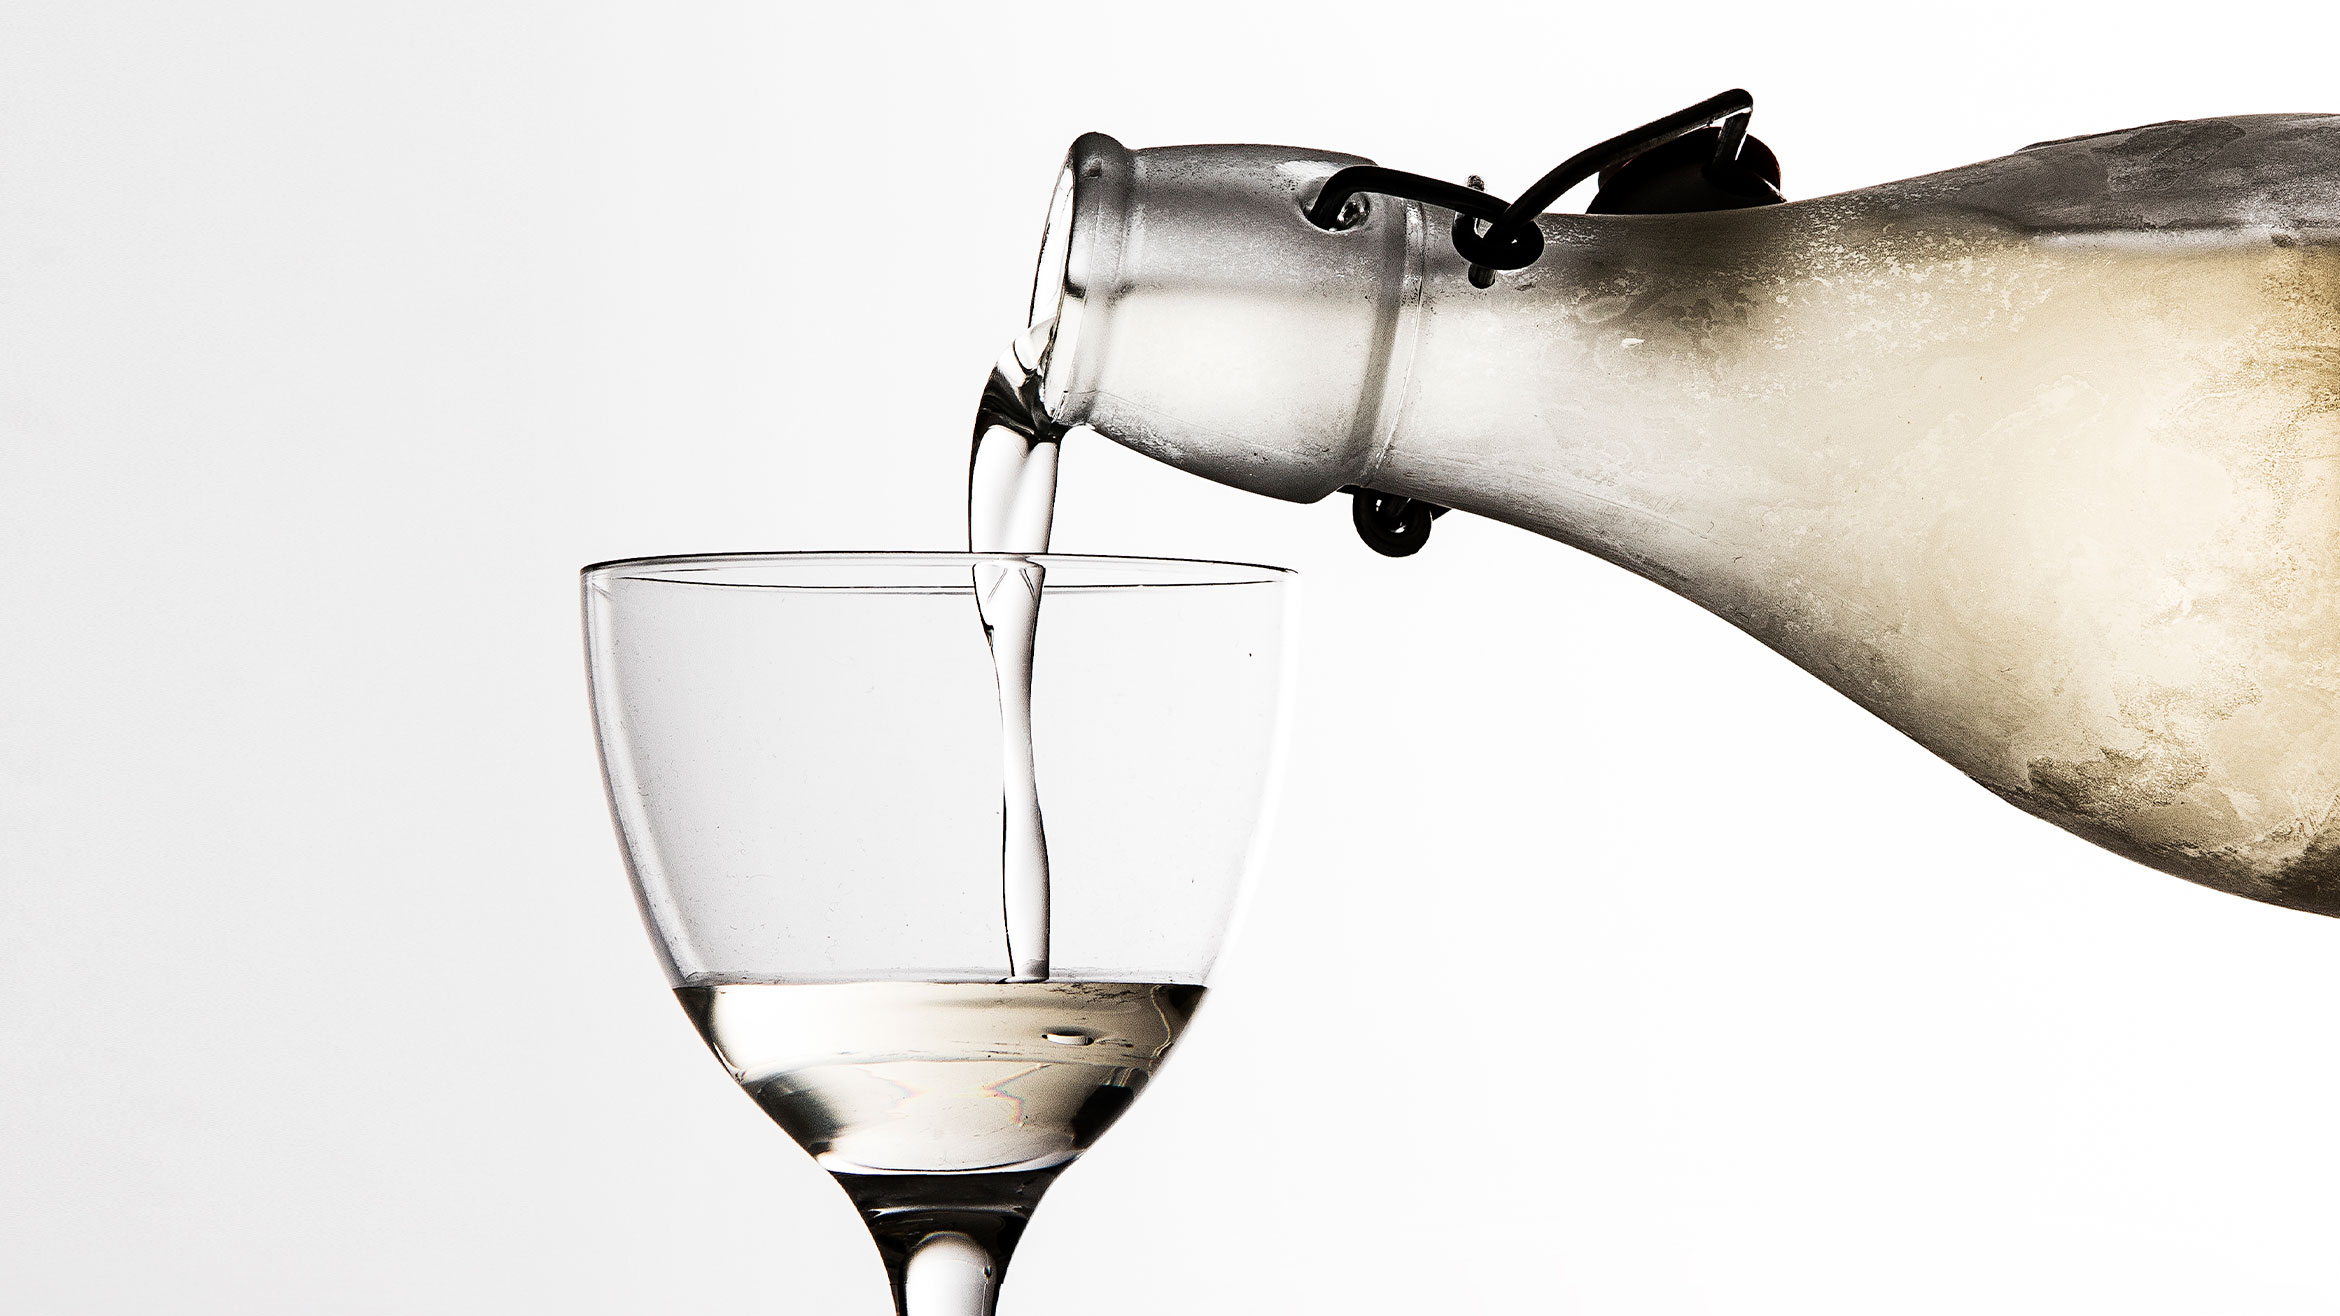 A frosty bottle pours liquid into a cocktail glass